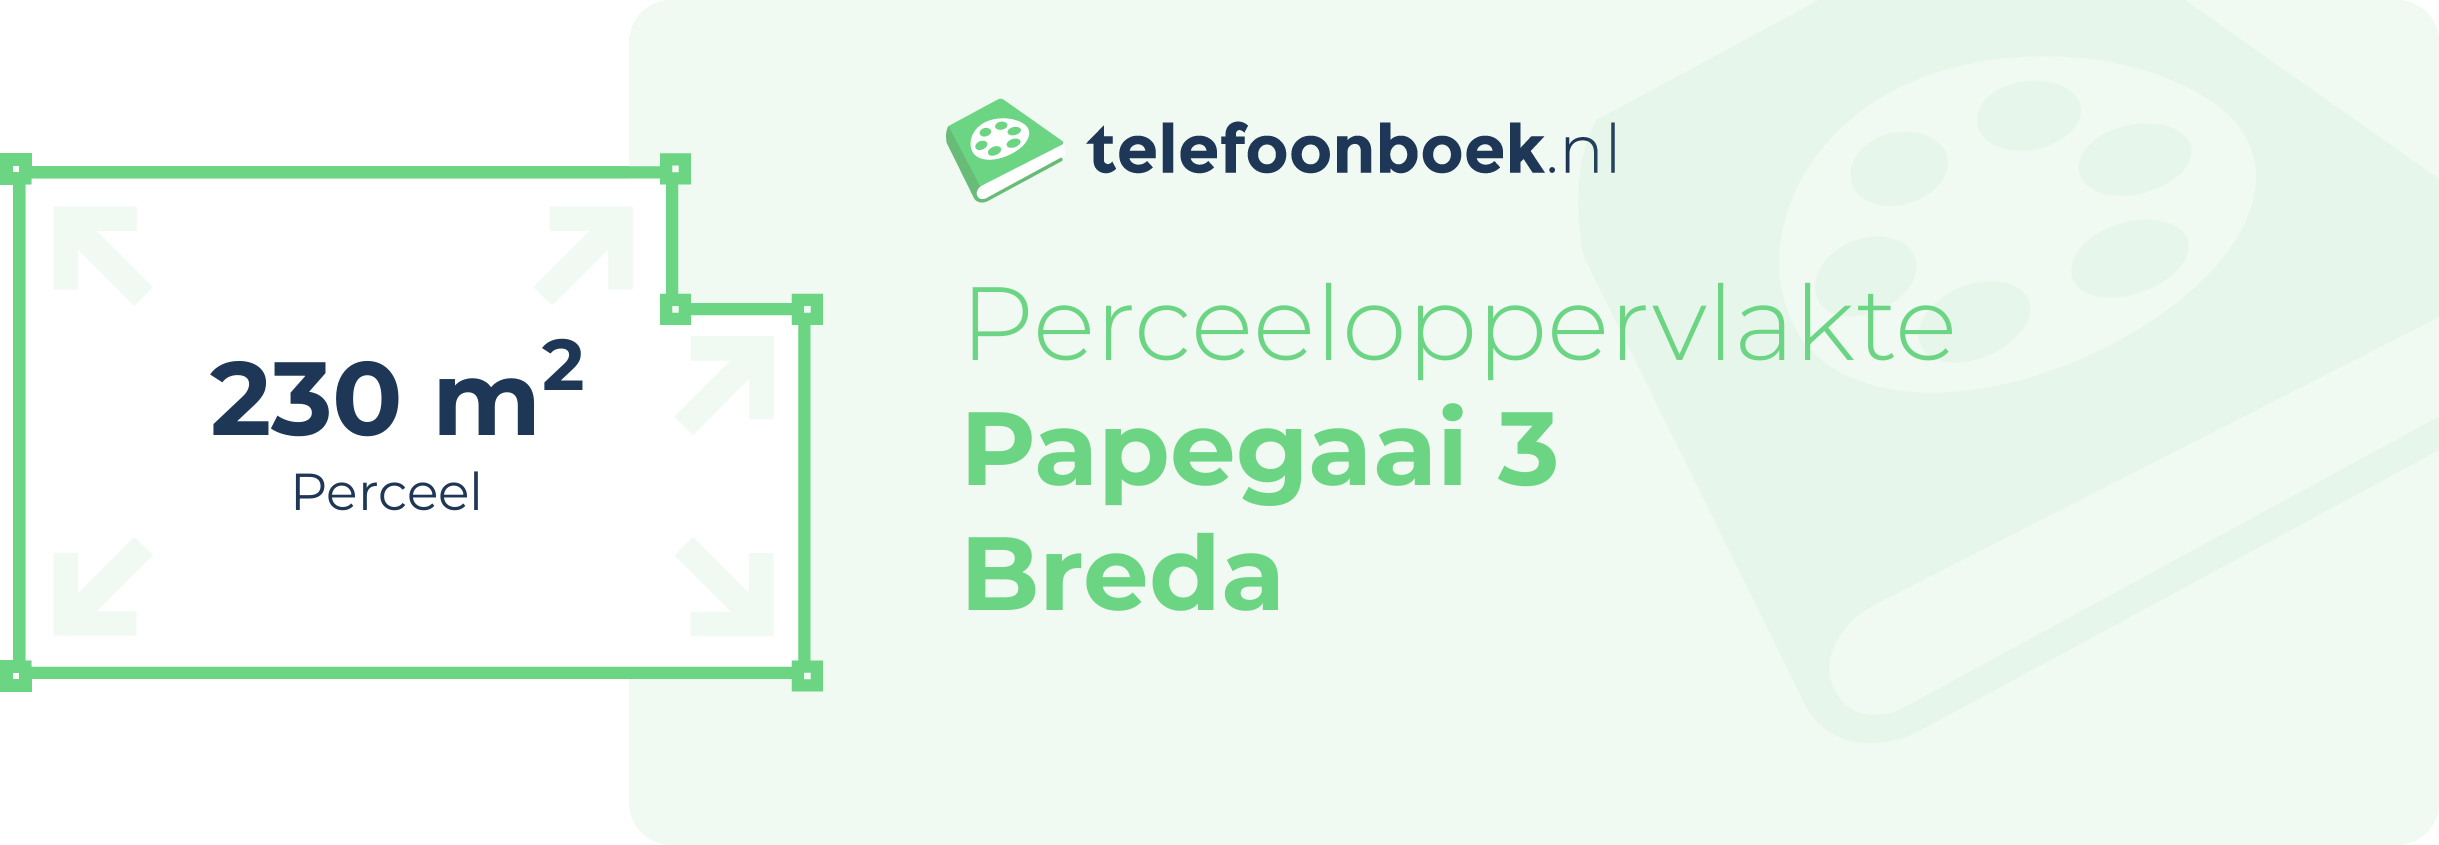 Perceeloppervlakte Papegaai 3 Breda